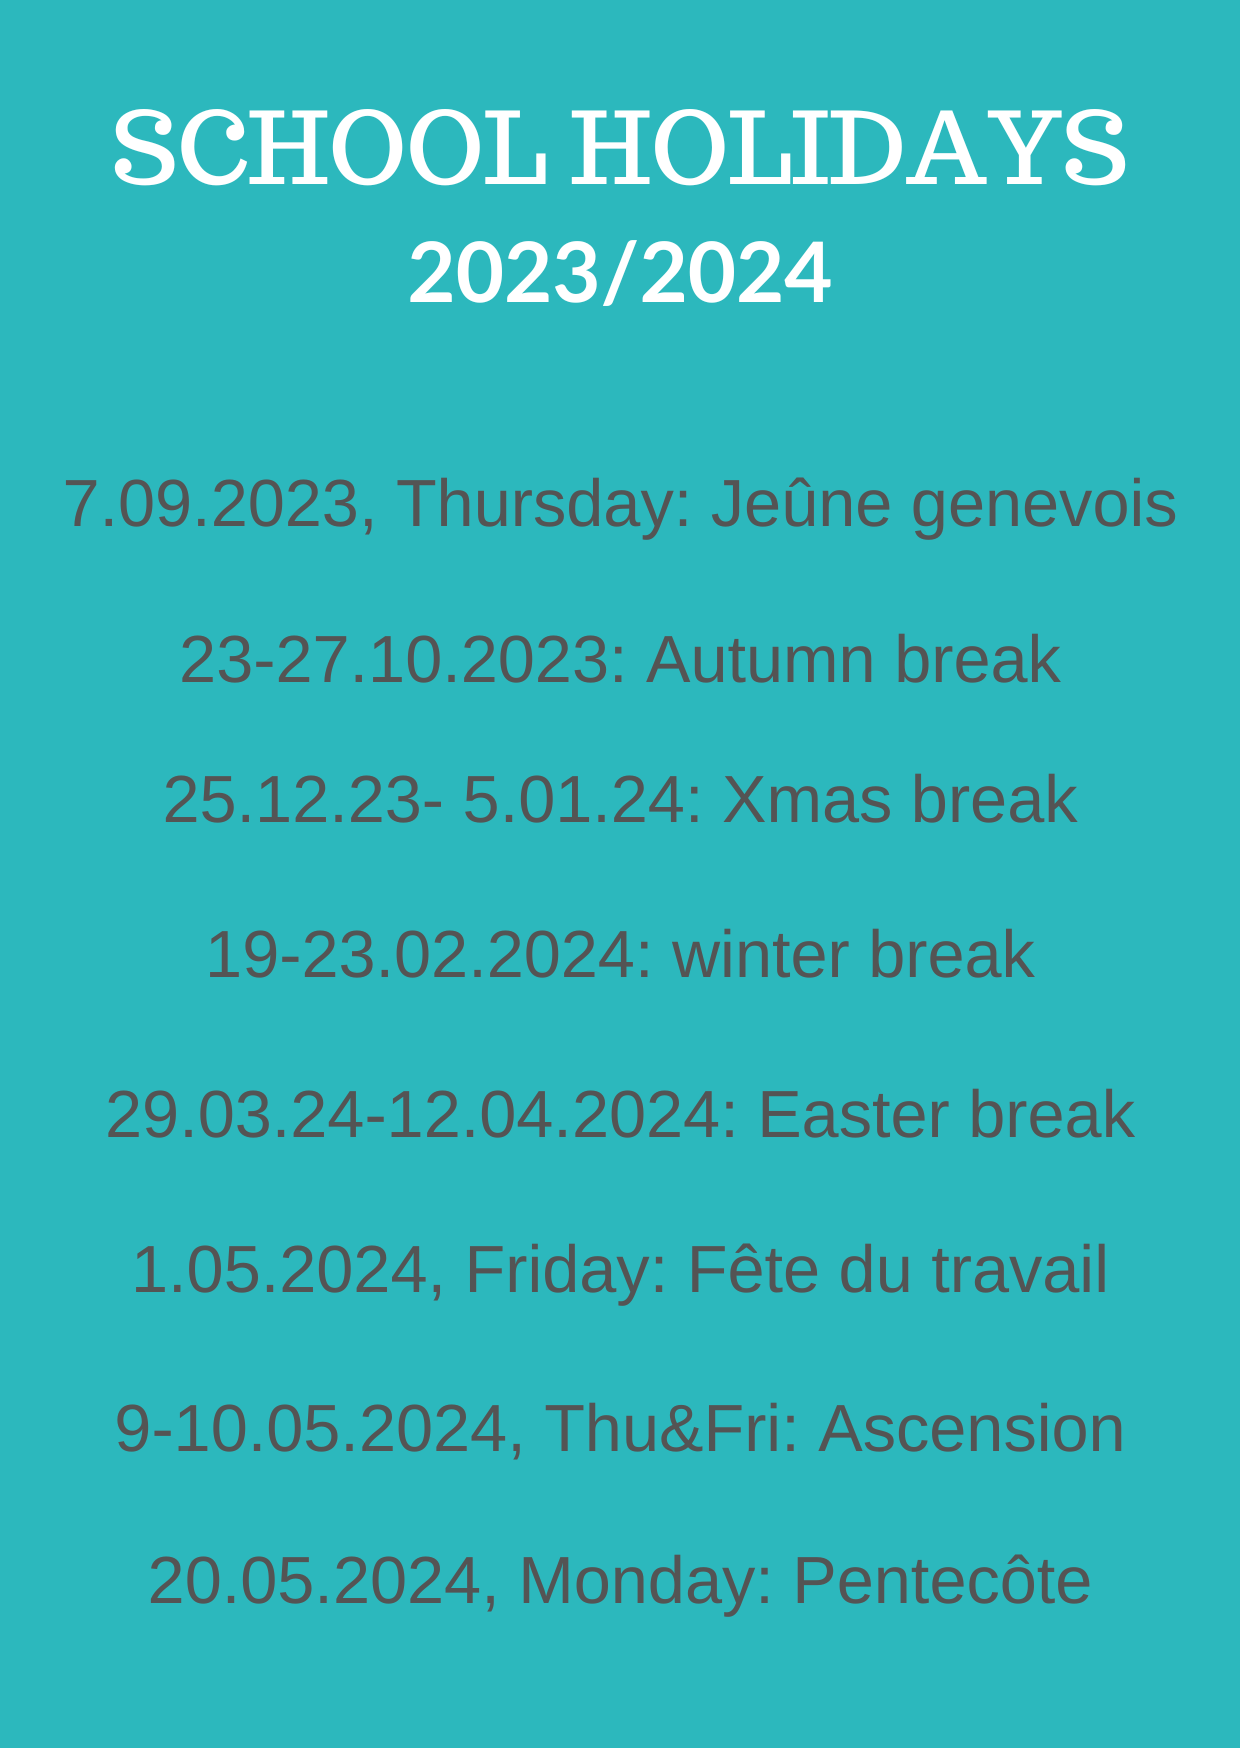 Geneva school holidays 2023/2024